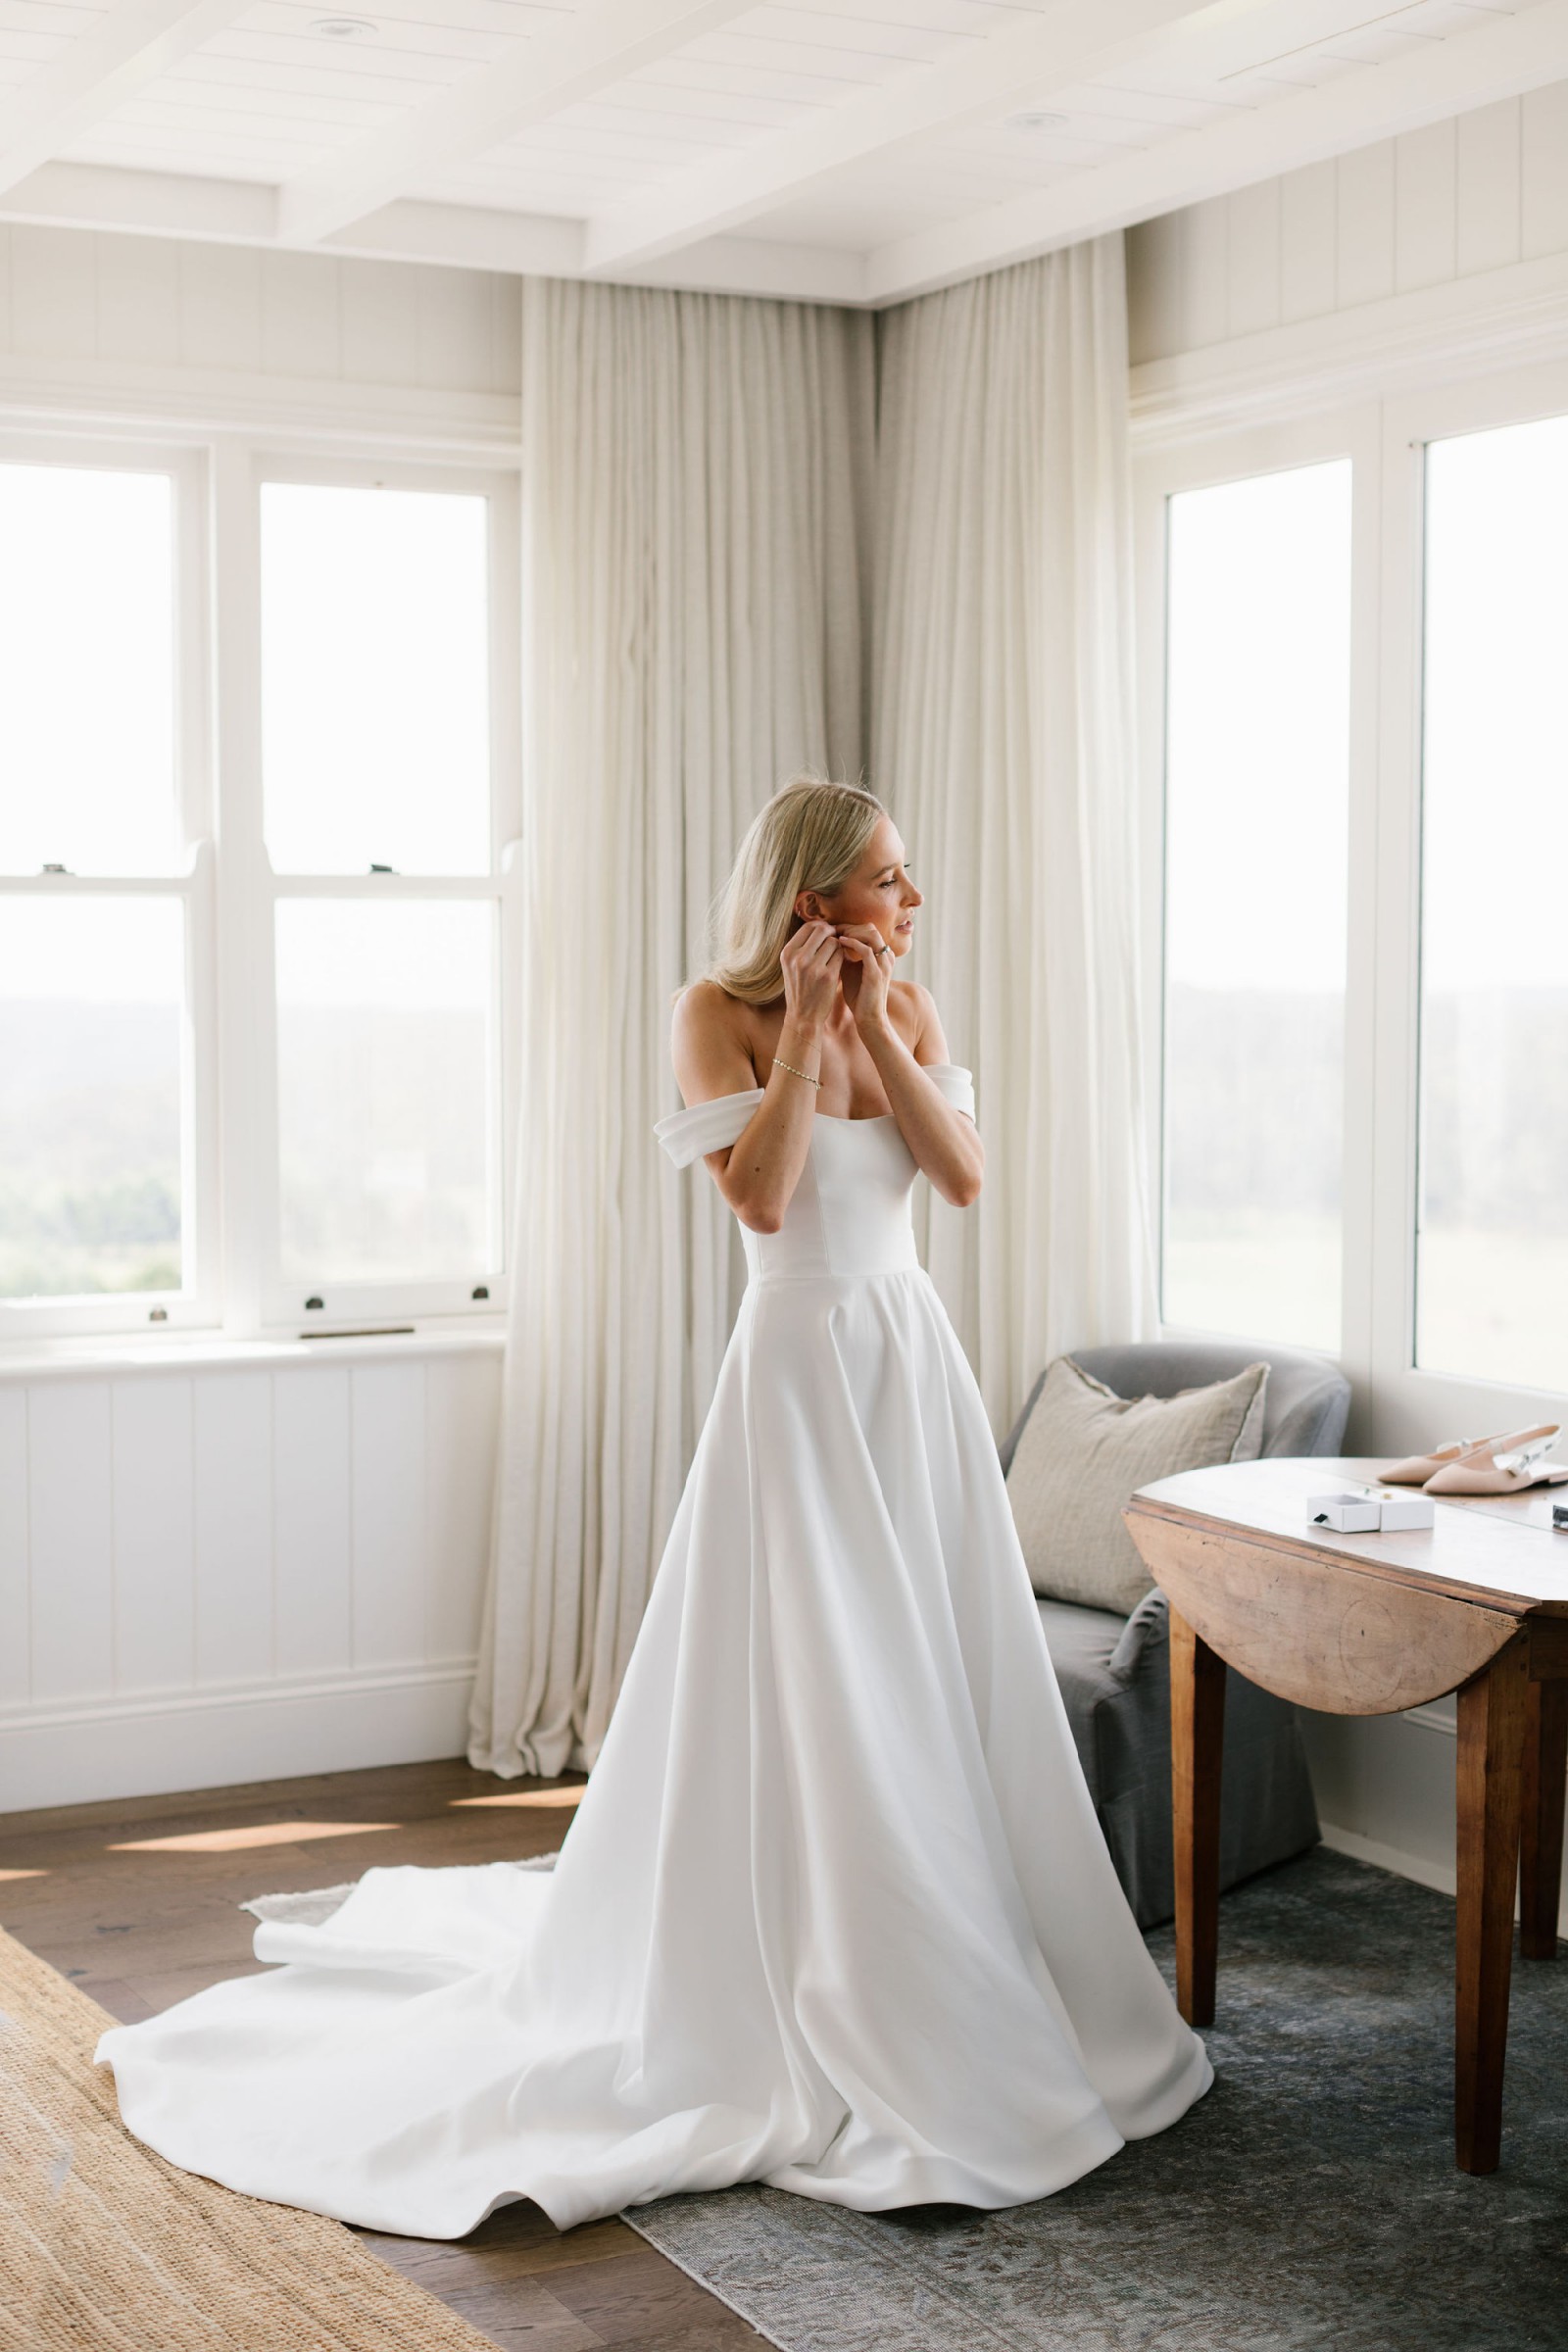 How far off the ground should a wedding dress be? – MyDressbox Australia